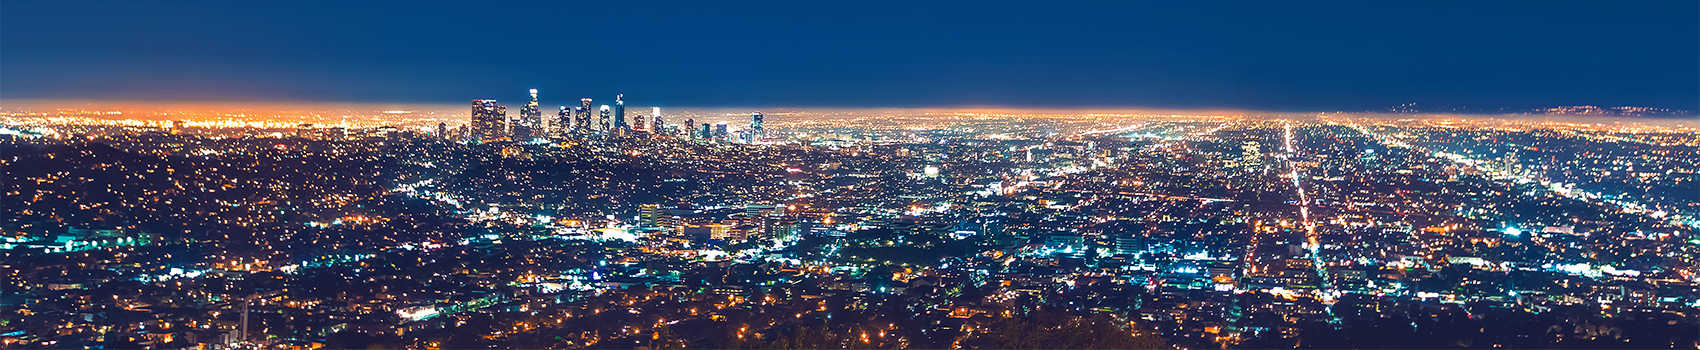 downtown L.A. night skyline